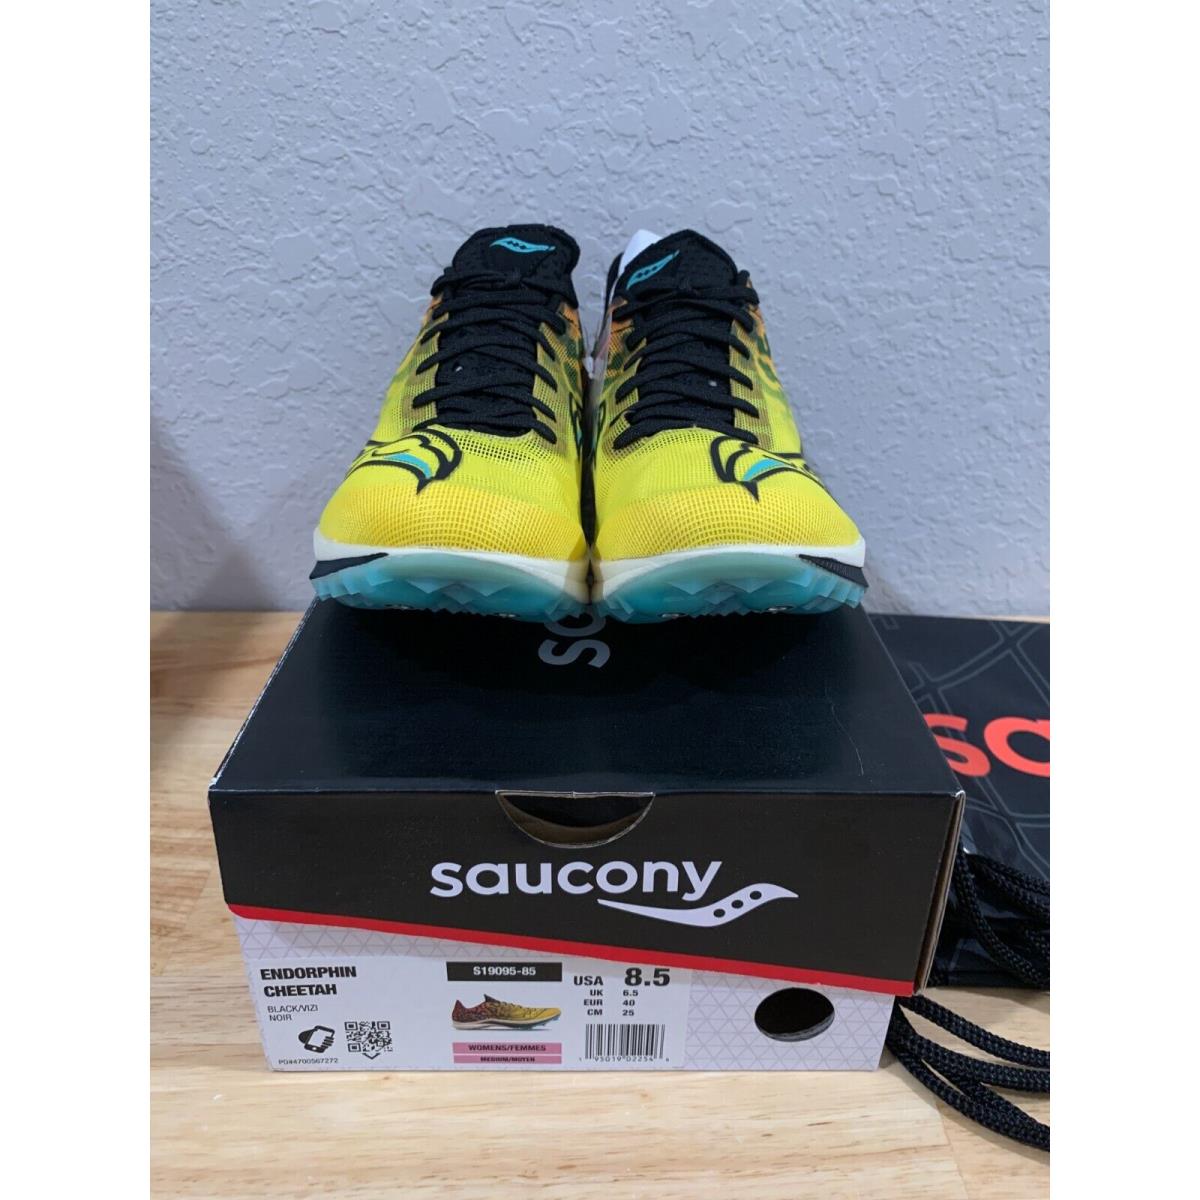 Saucony Endorphin Cheetah Women`s Running Shoes Black US 8.5 S19095-85